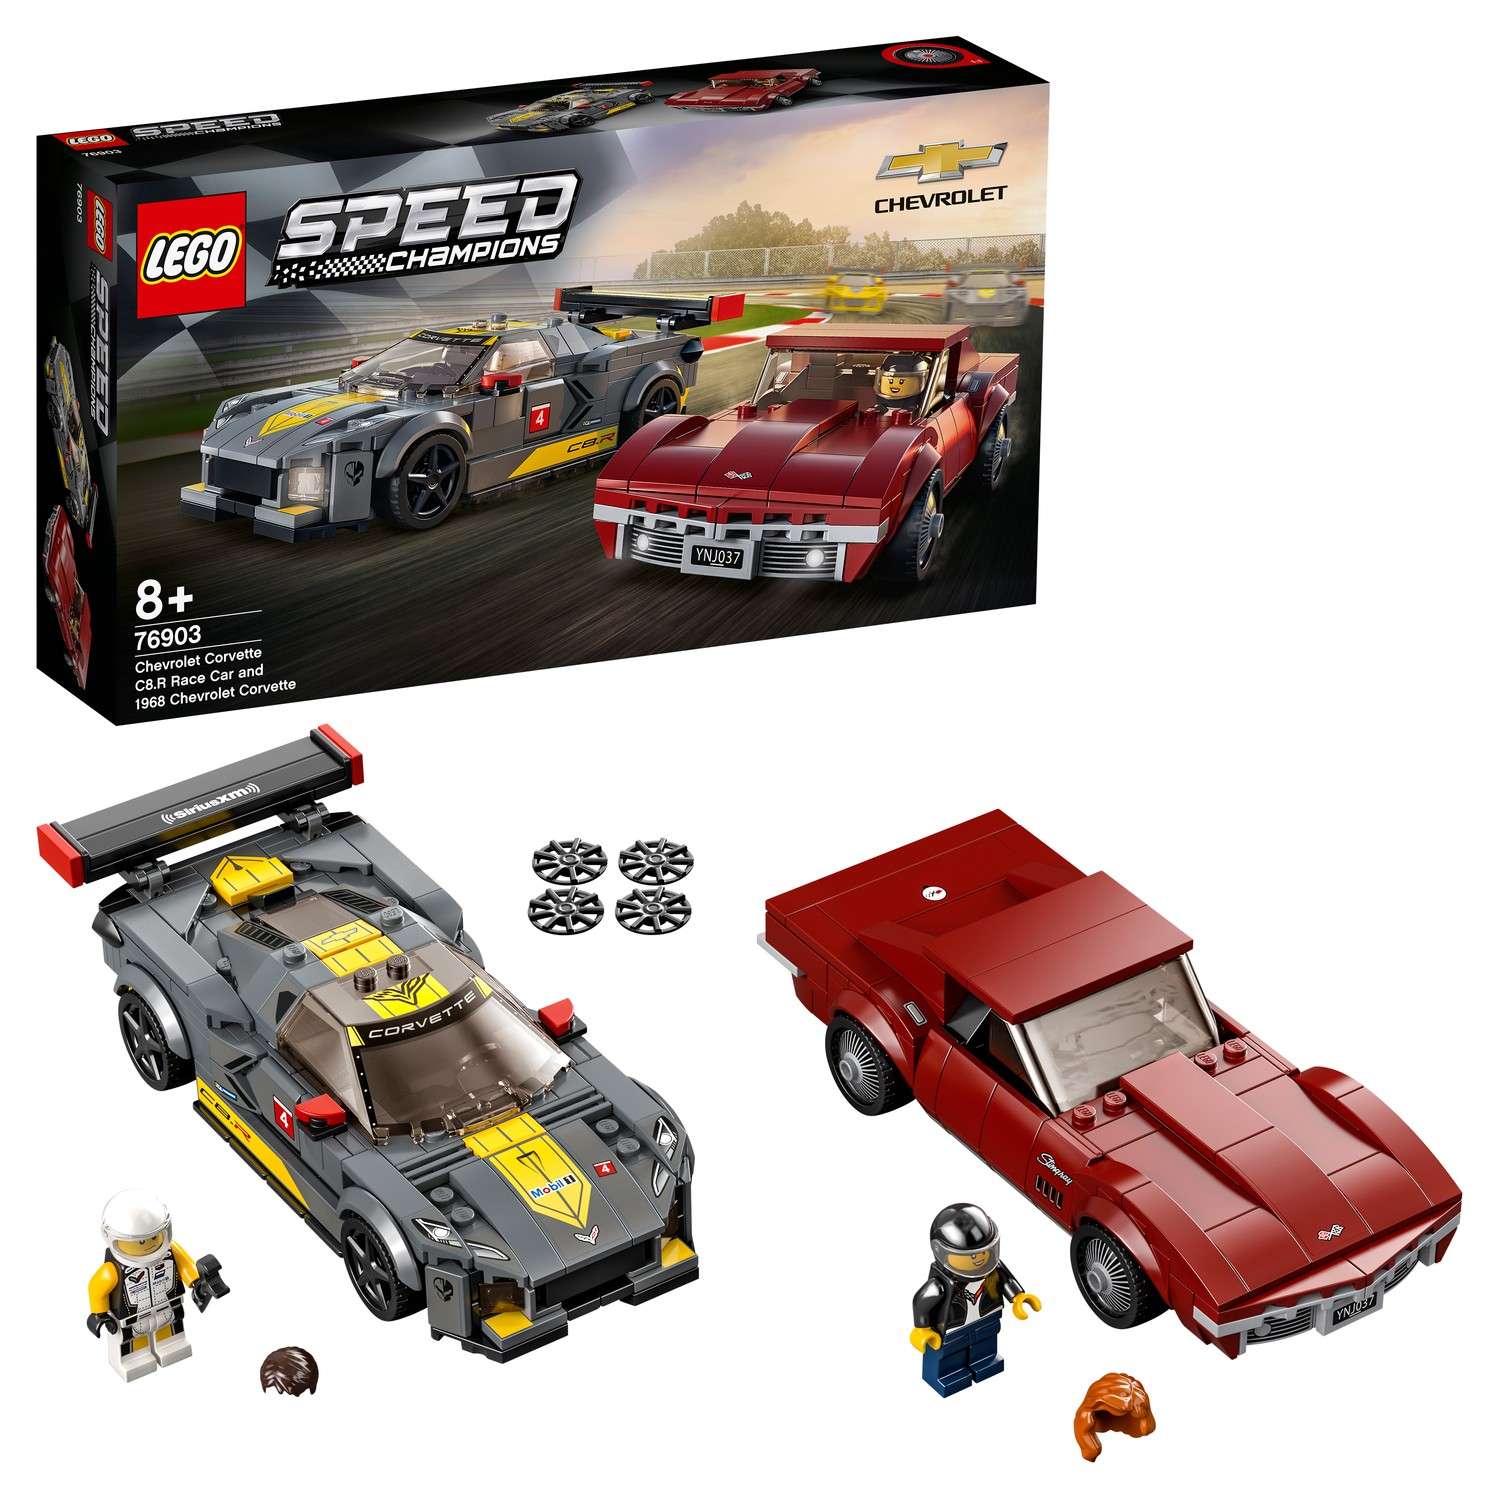 Конструктор LEGO Speed Champions Chevrolet Corvette C8.R Race Car and 1968 Chevrolet Corvette 76903 - фото 1